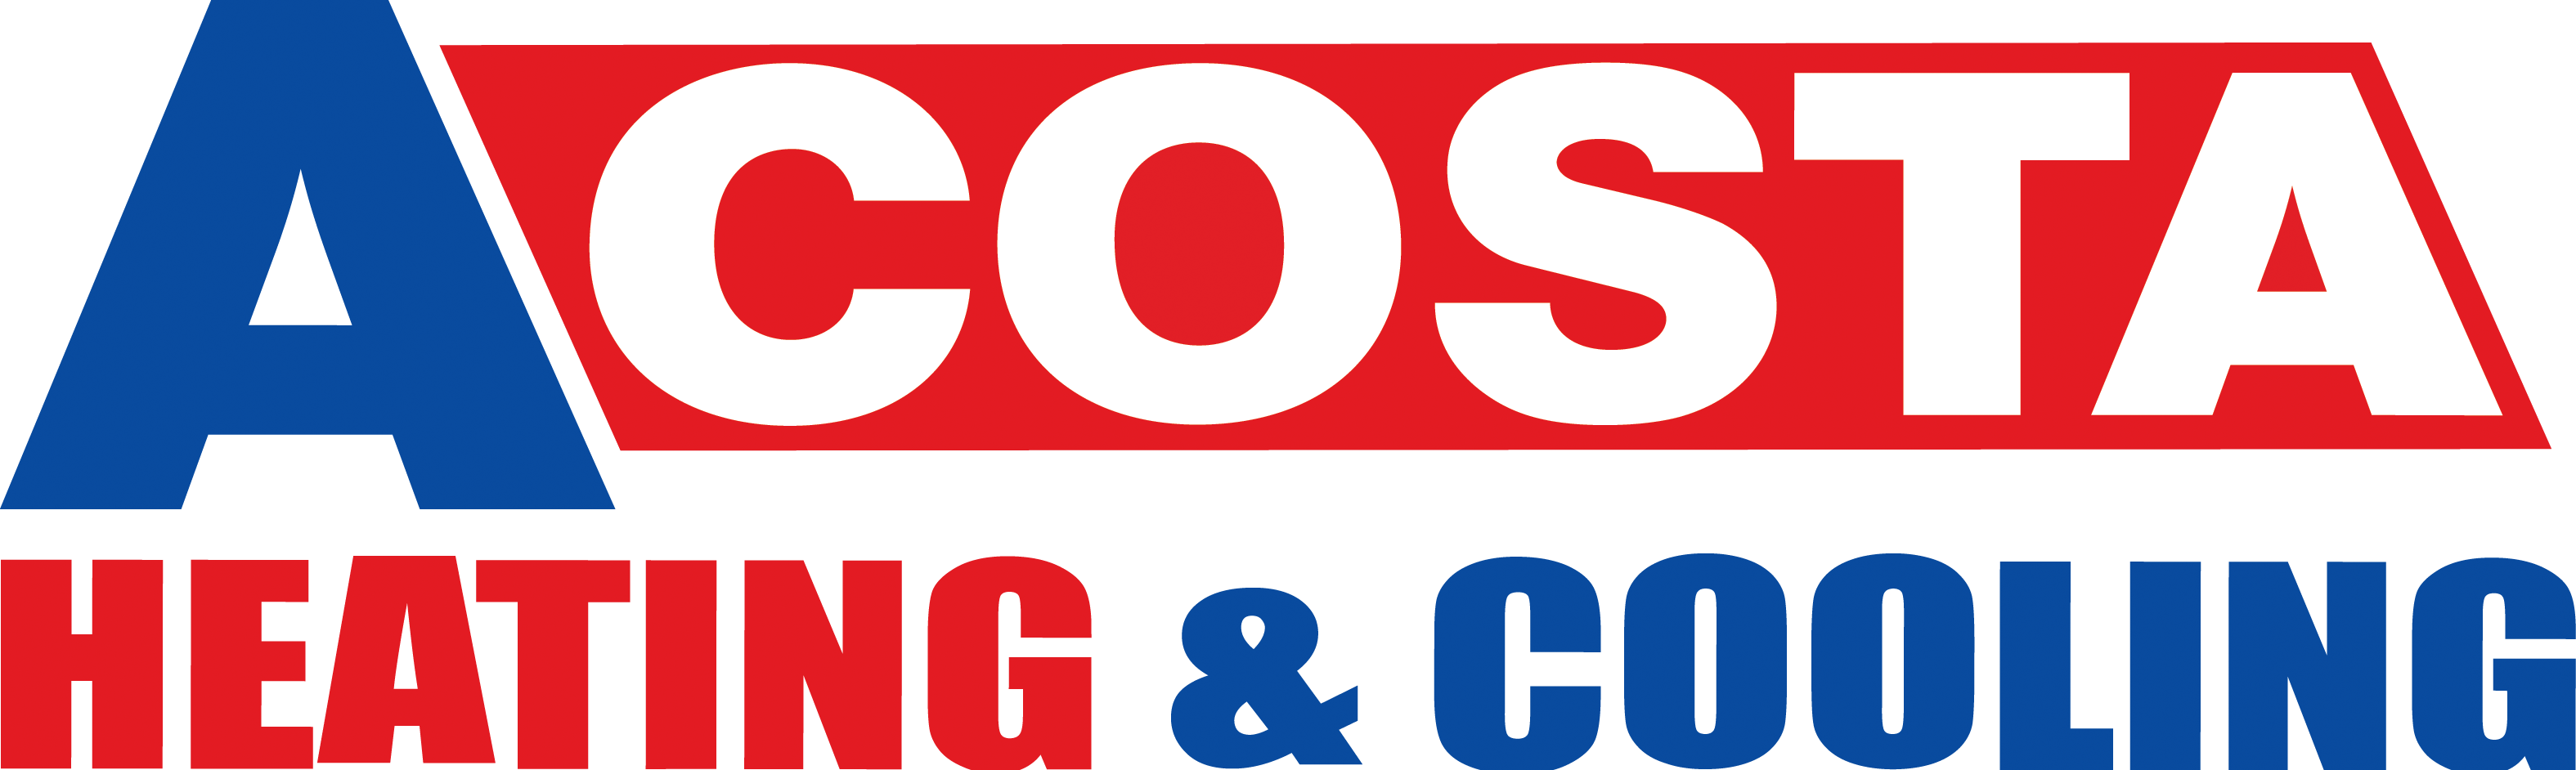 Acosta Logo - Acosta Logo